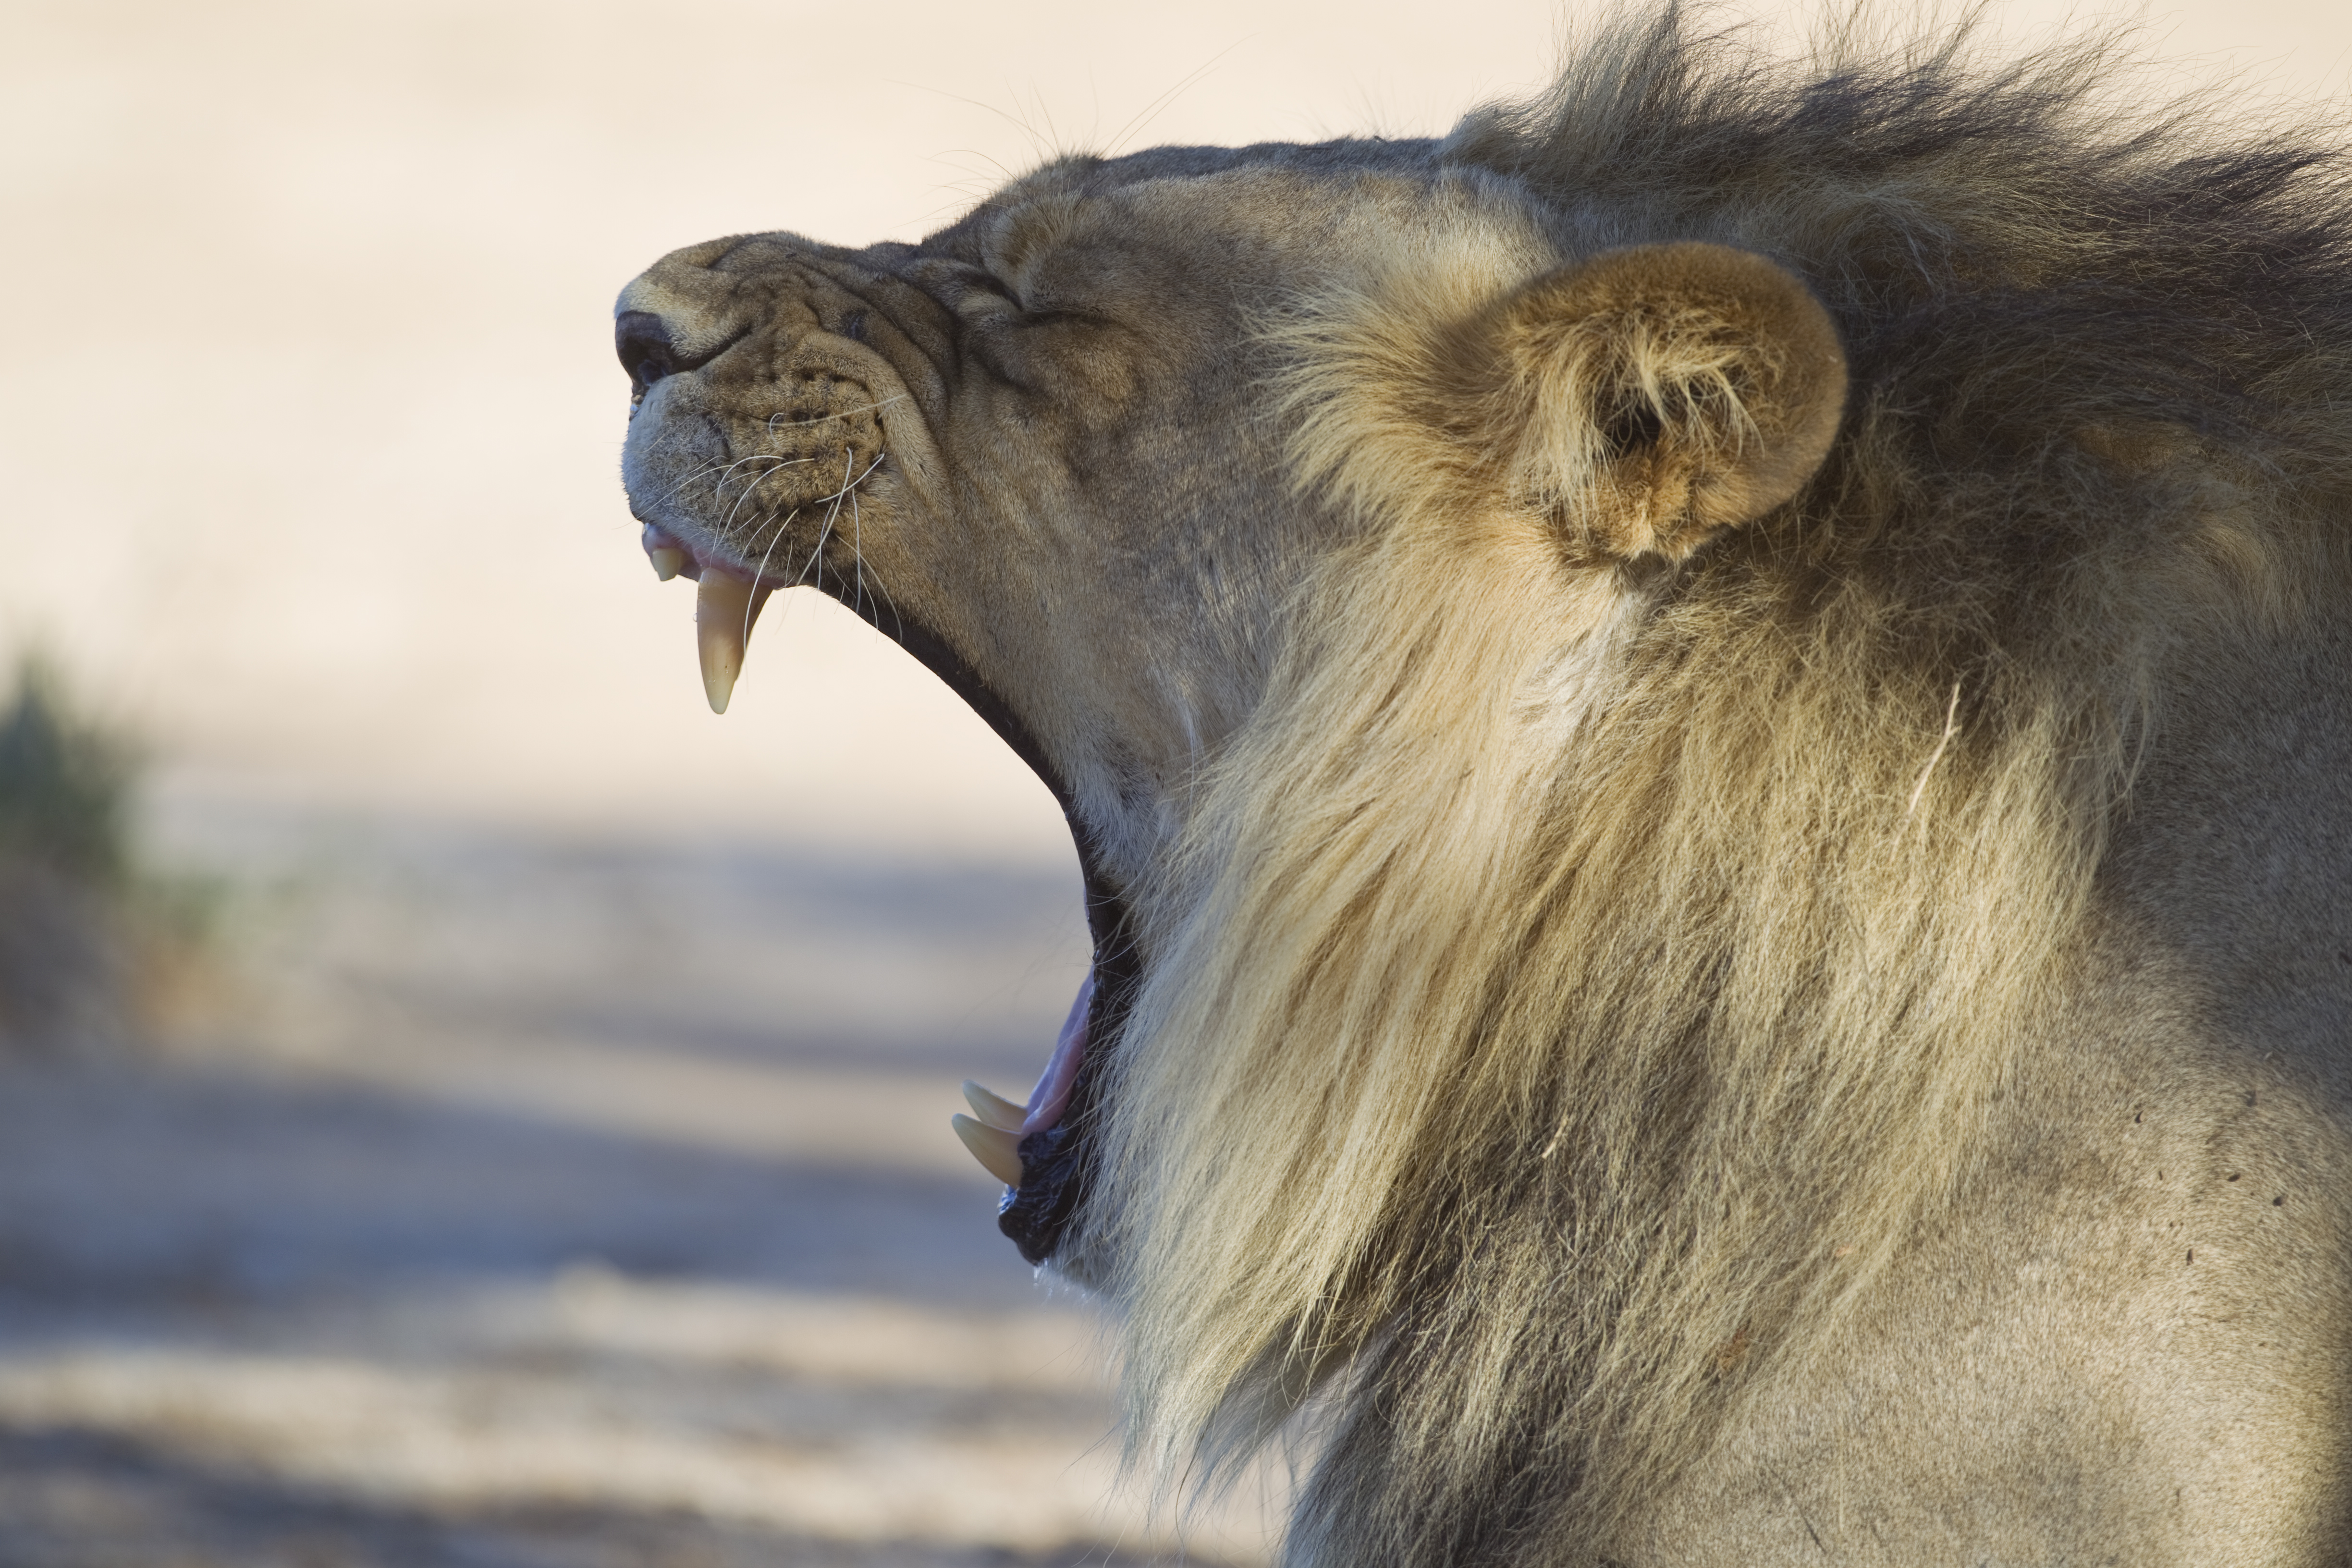 Panthera leo yawn (Kgalagadi, 2012)